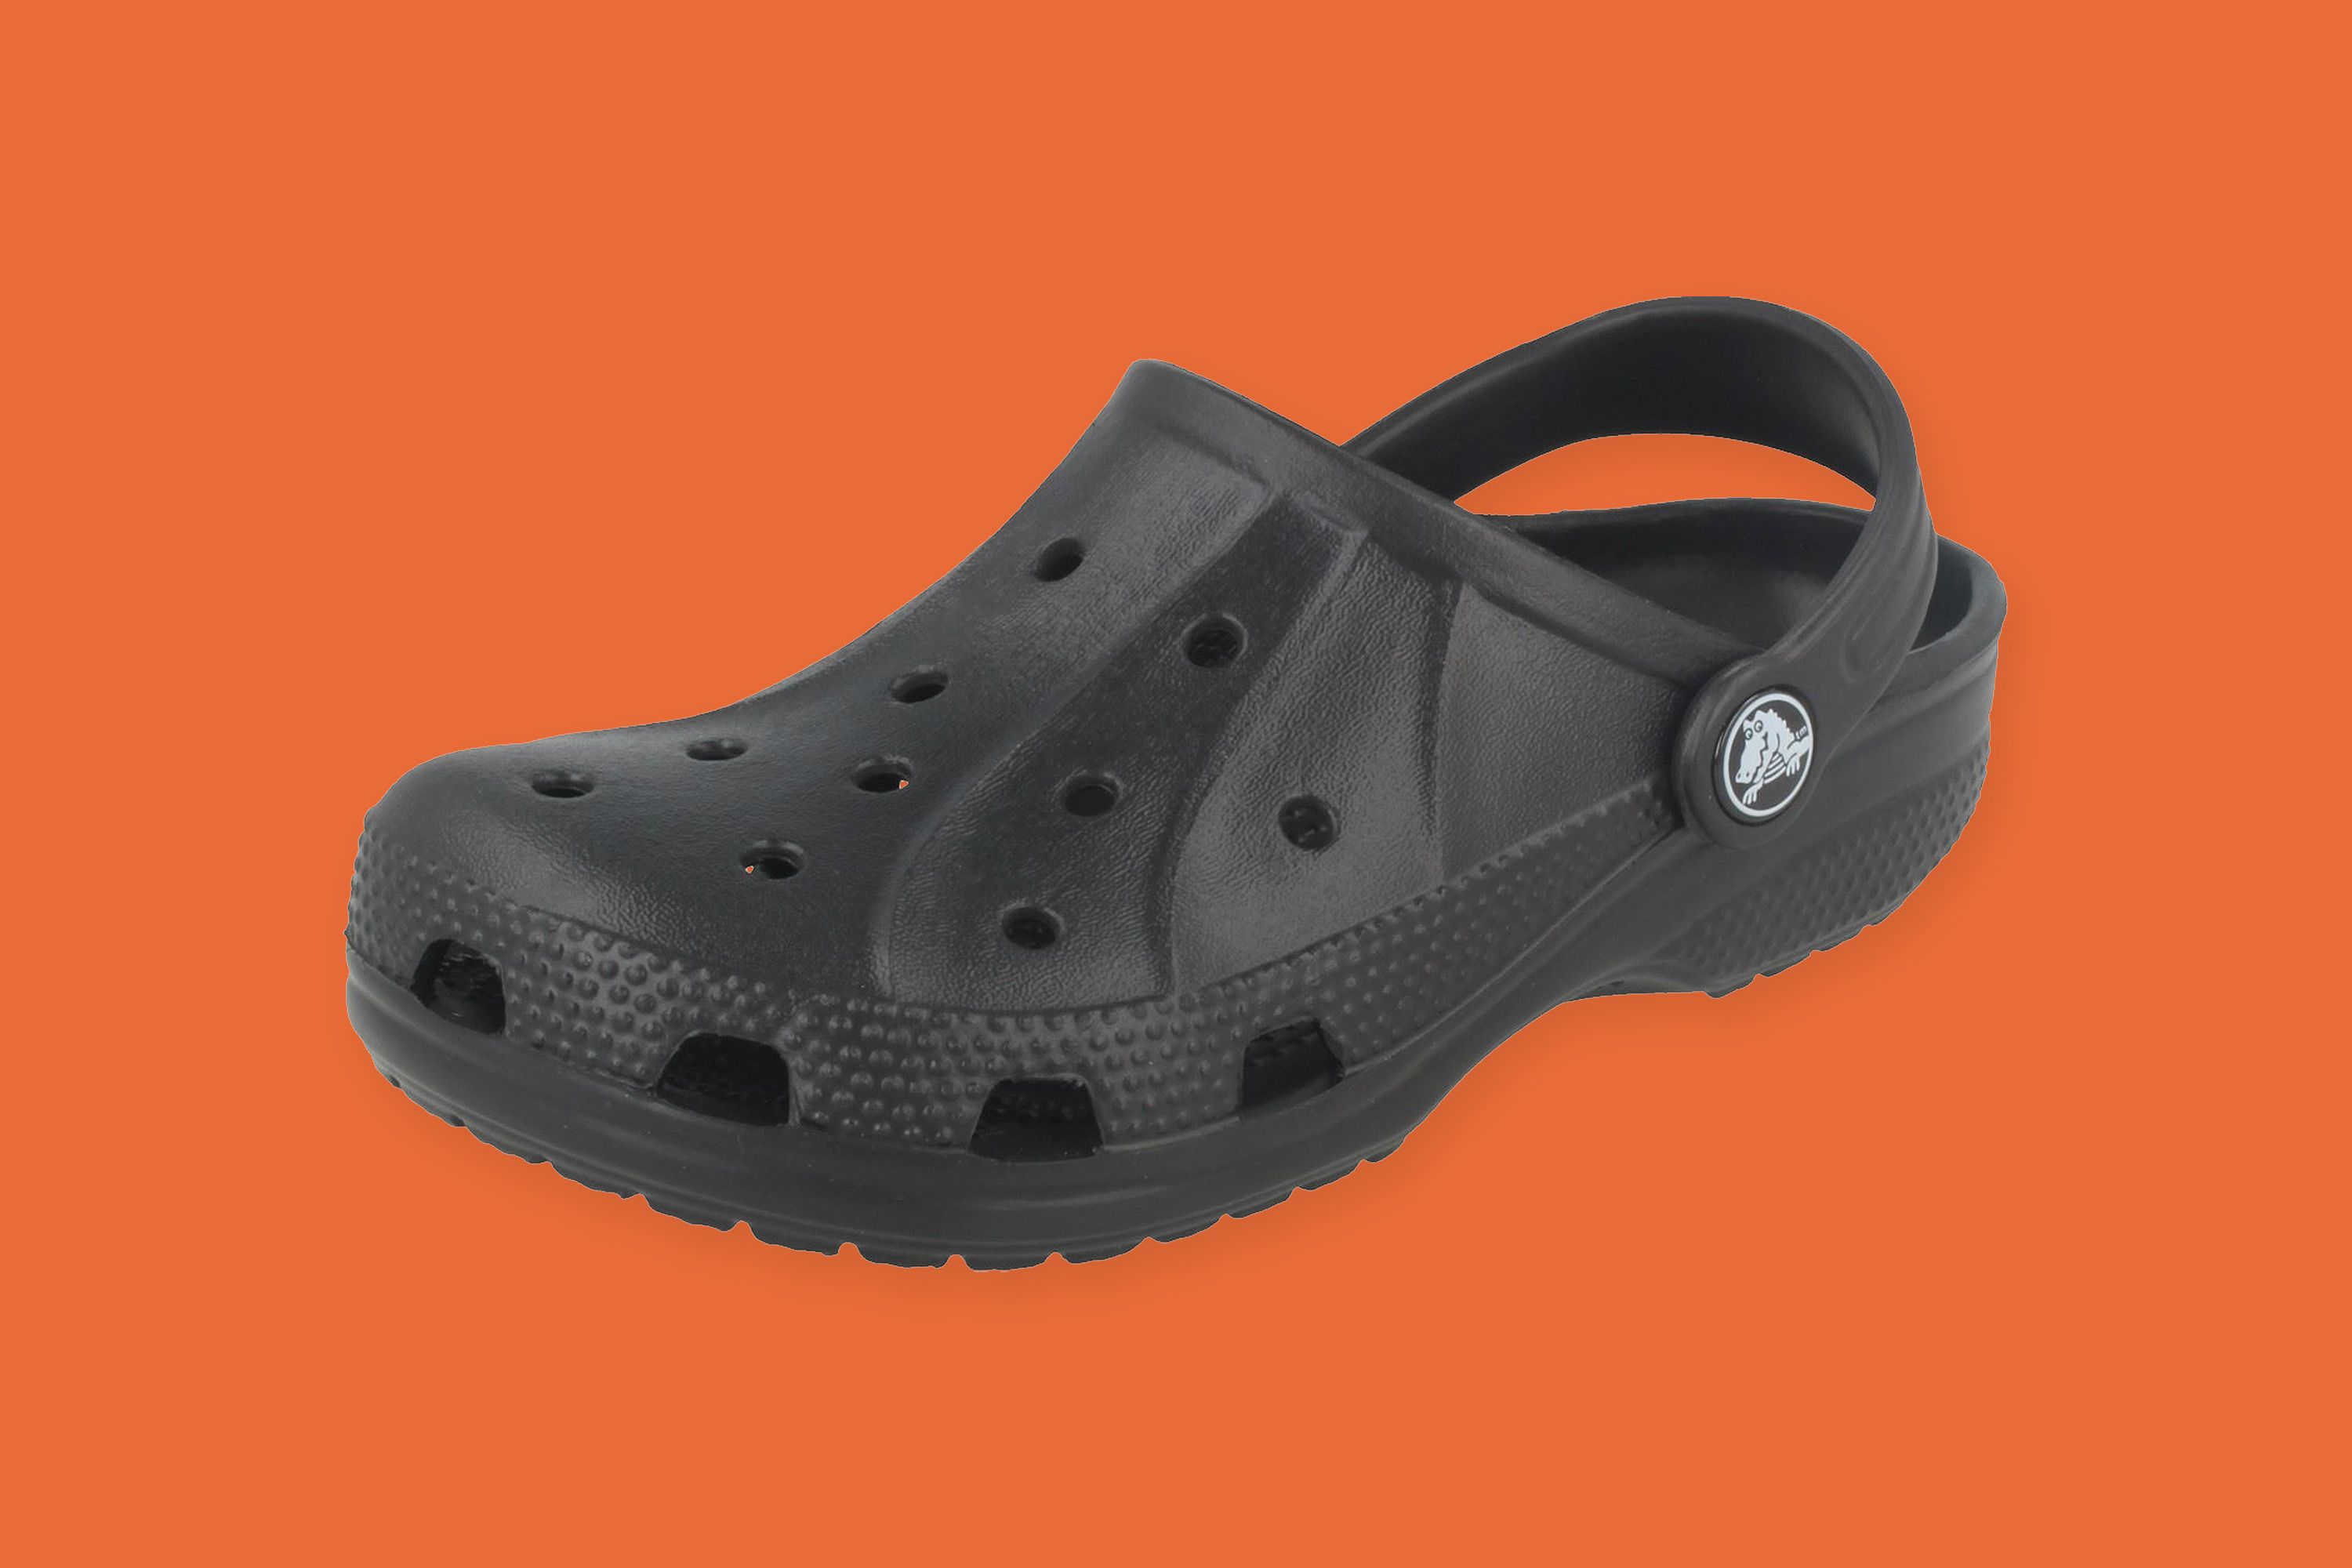 crocs walking boots